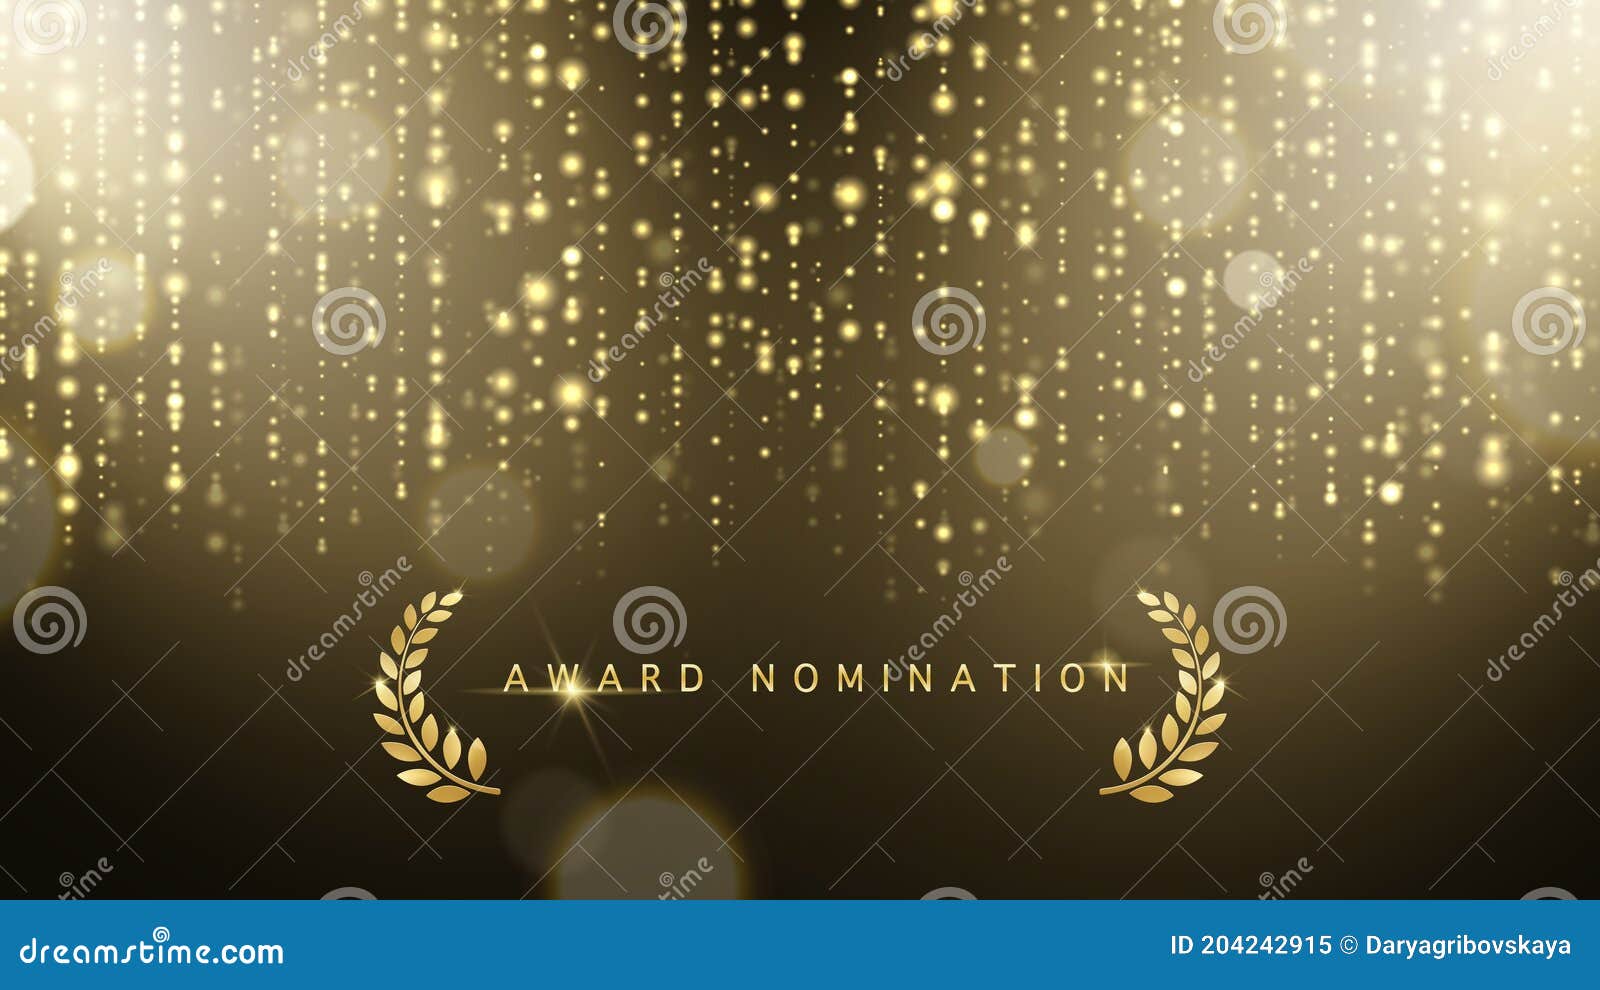 award nomination ceremony luxury background with golden glitter sparkles, laurel wreath and bokeh.  presentation